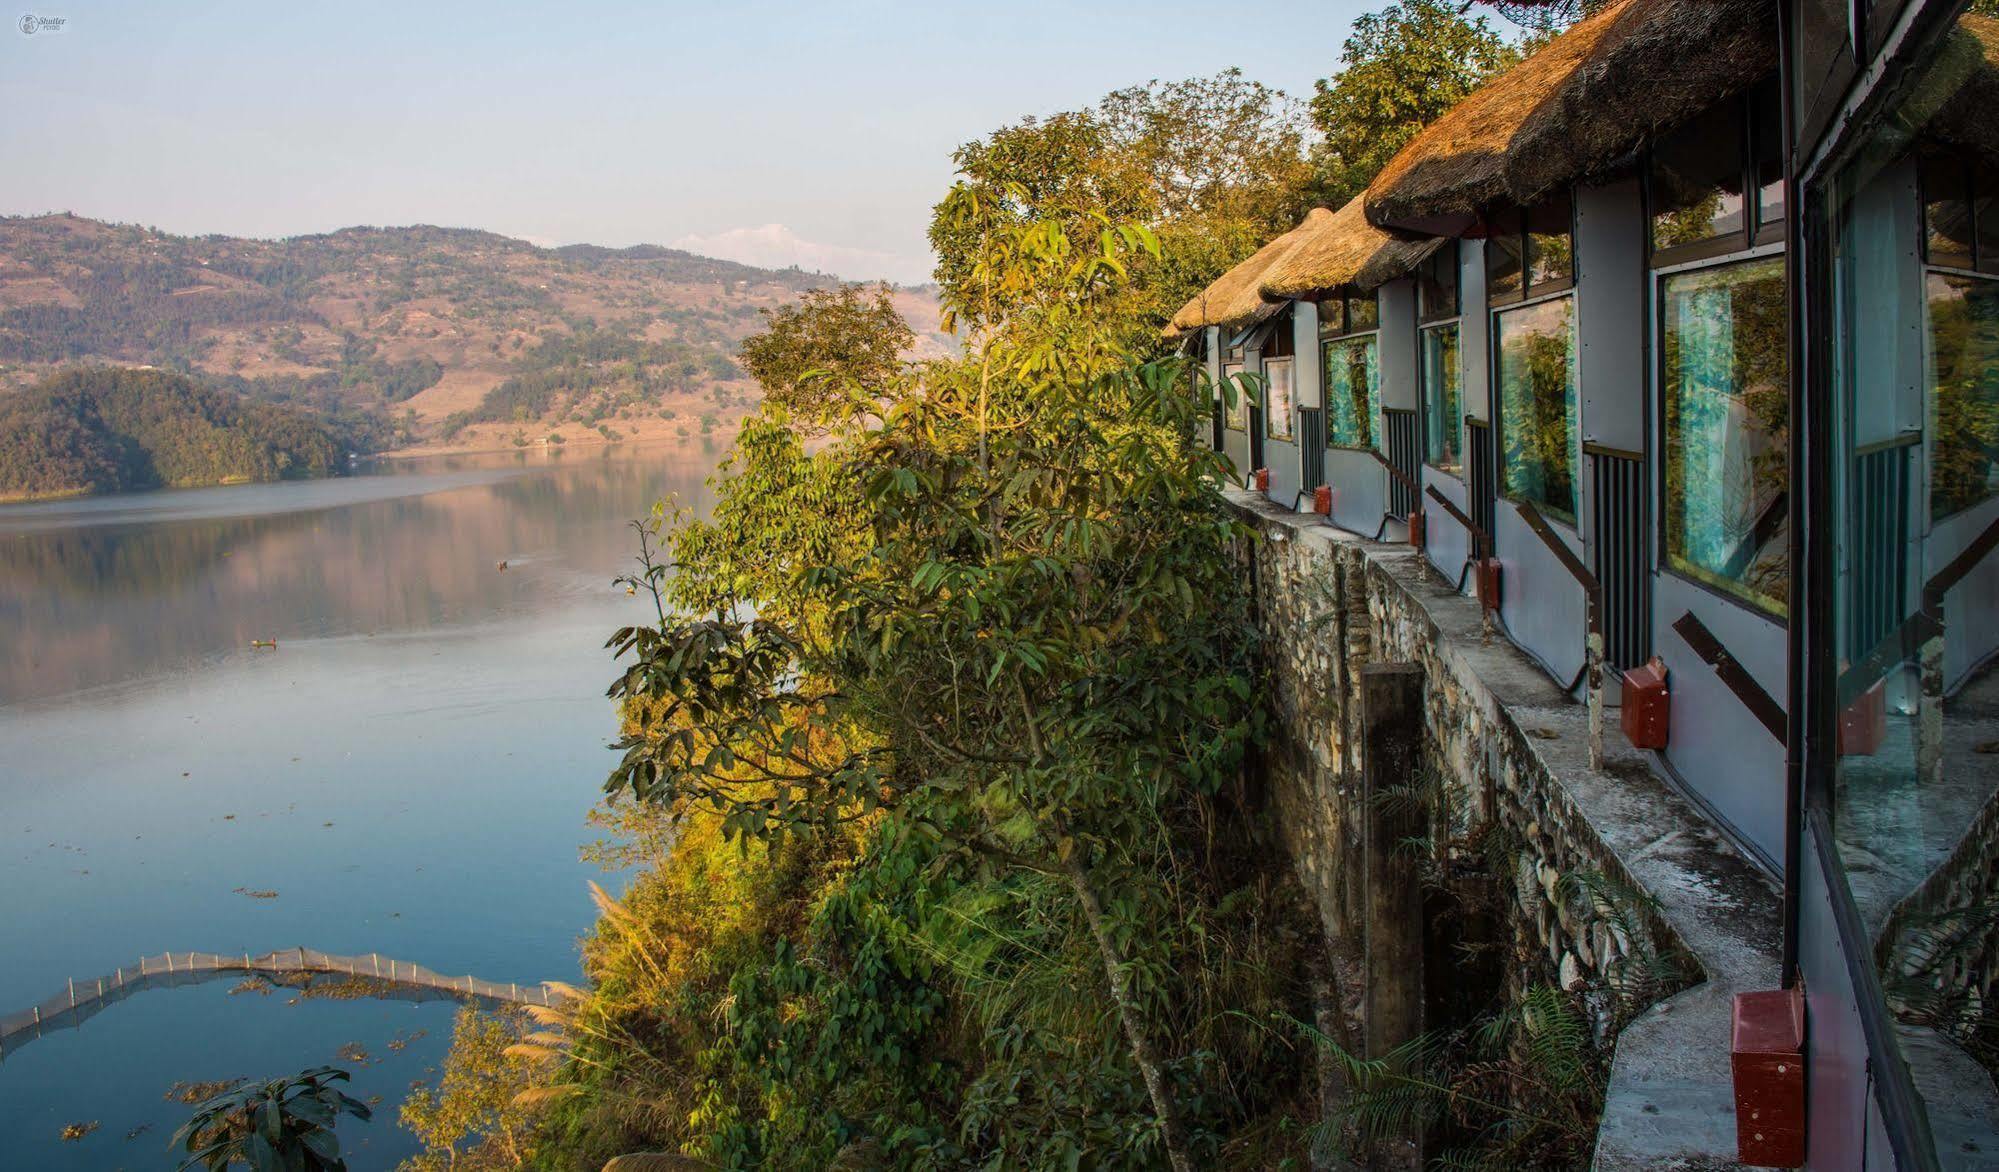 Hotel Seven Lake Paradise Lekhnath 外观 照片